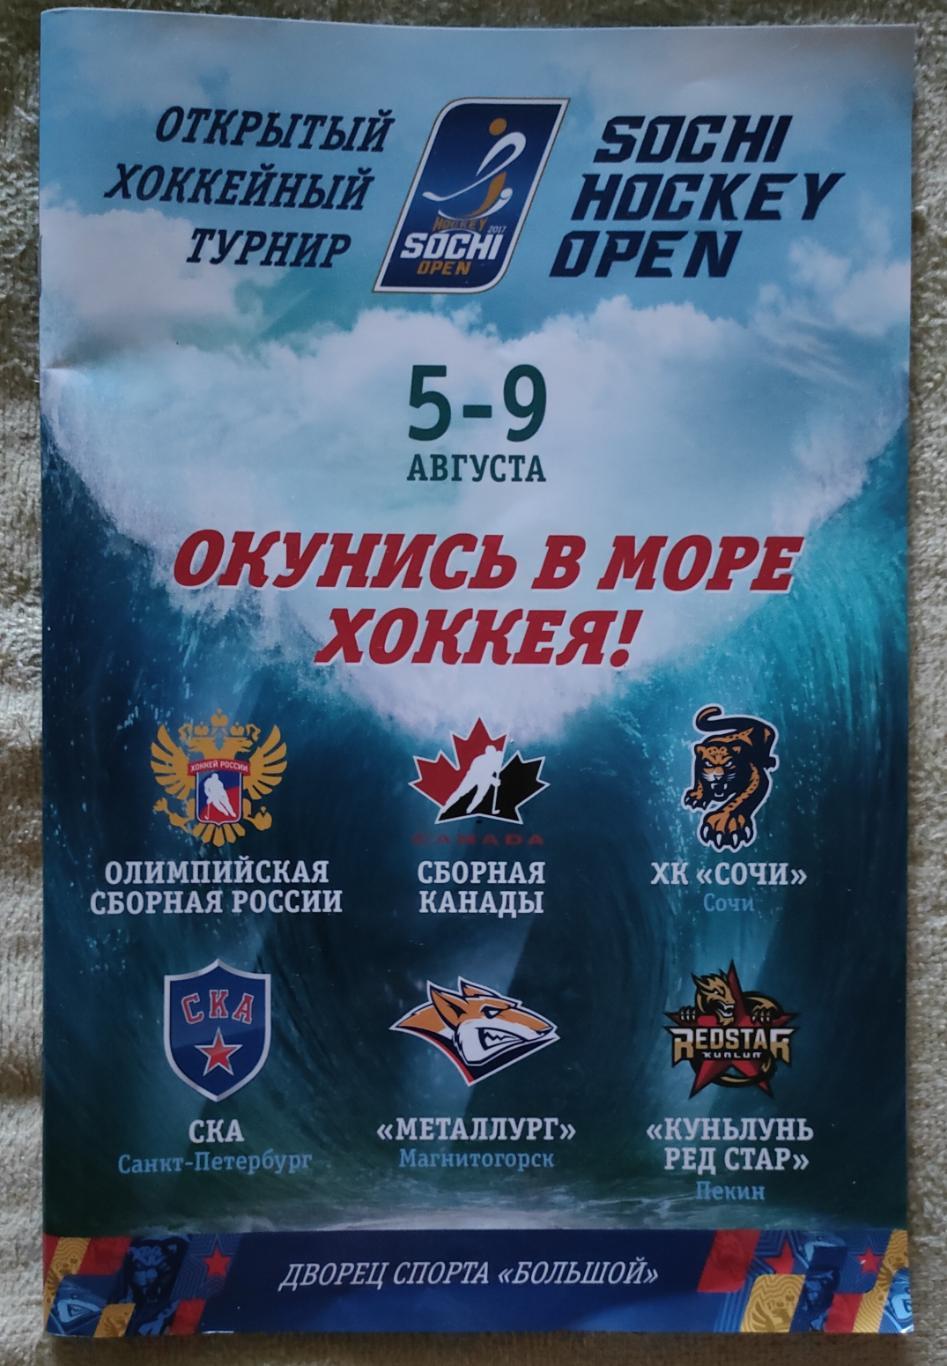 Sochi Hockey Open-2017. Сочи, Санкт Петербург, Магнитогорск, Канада, сб. России